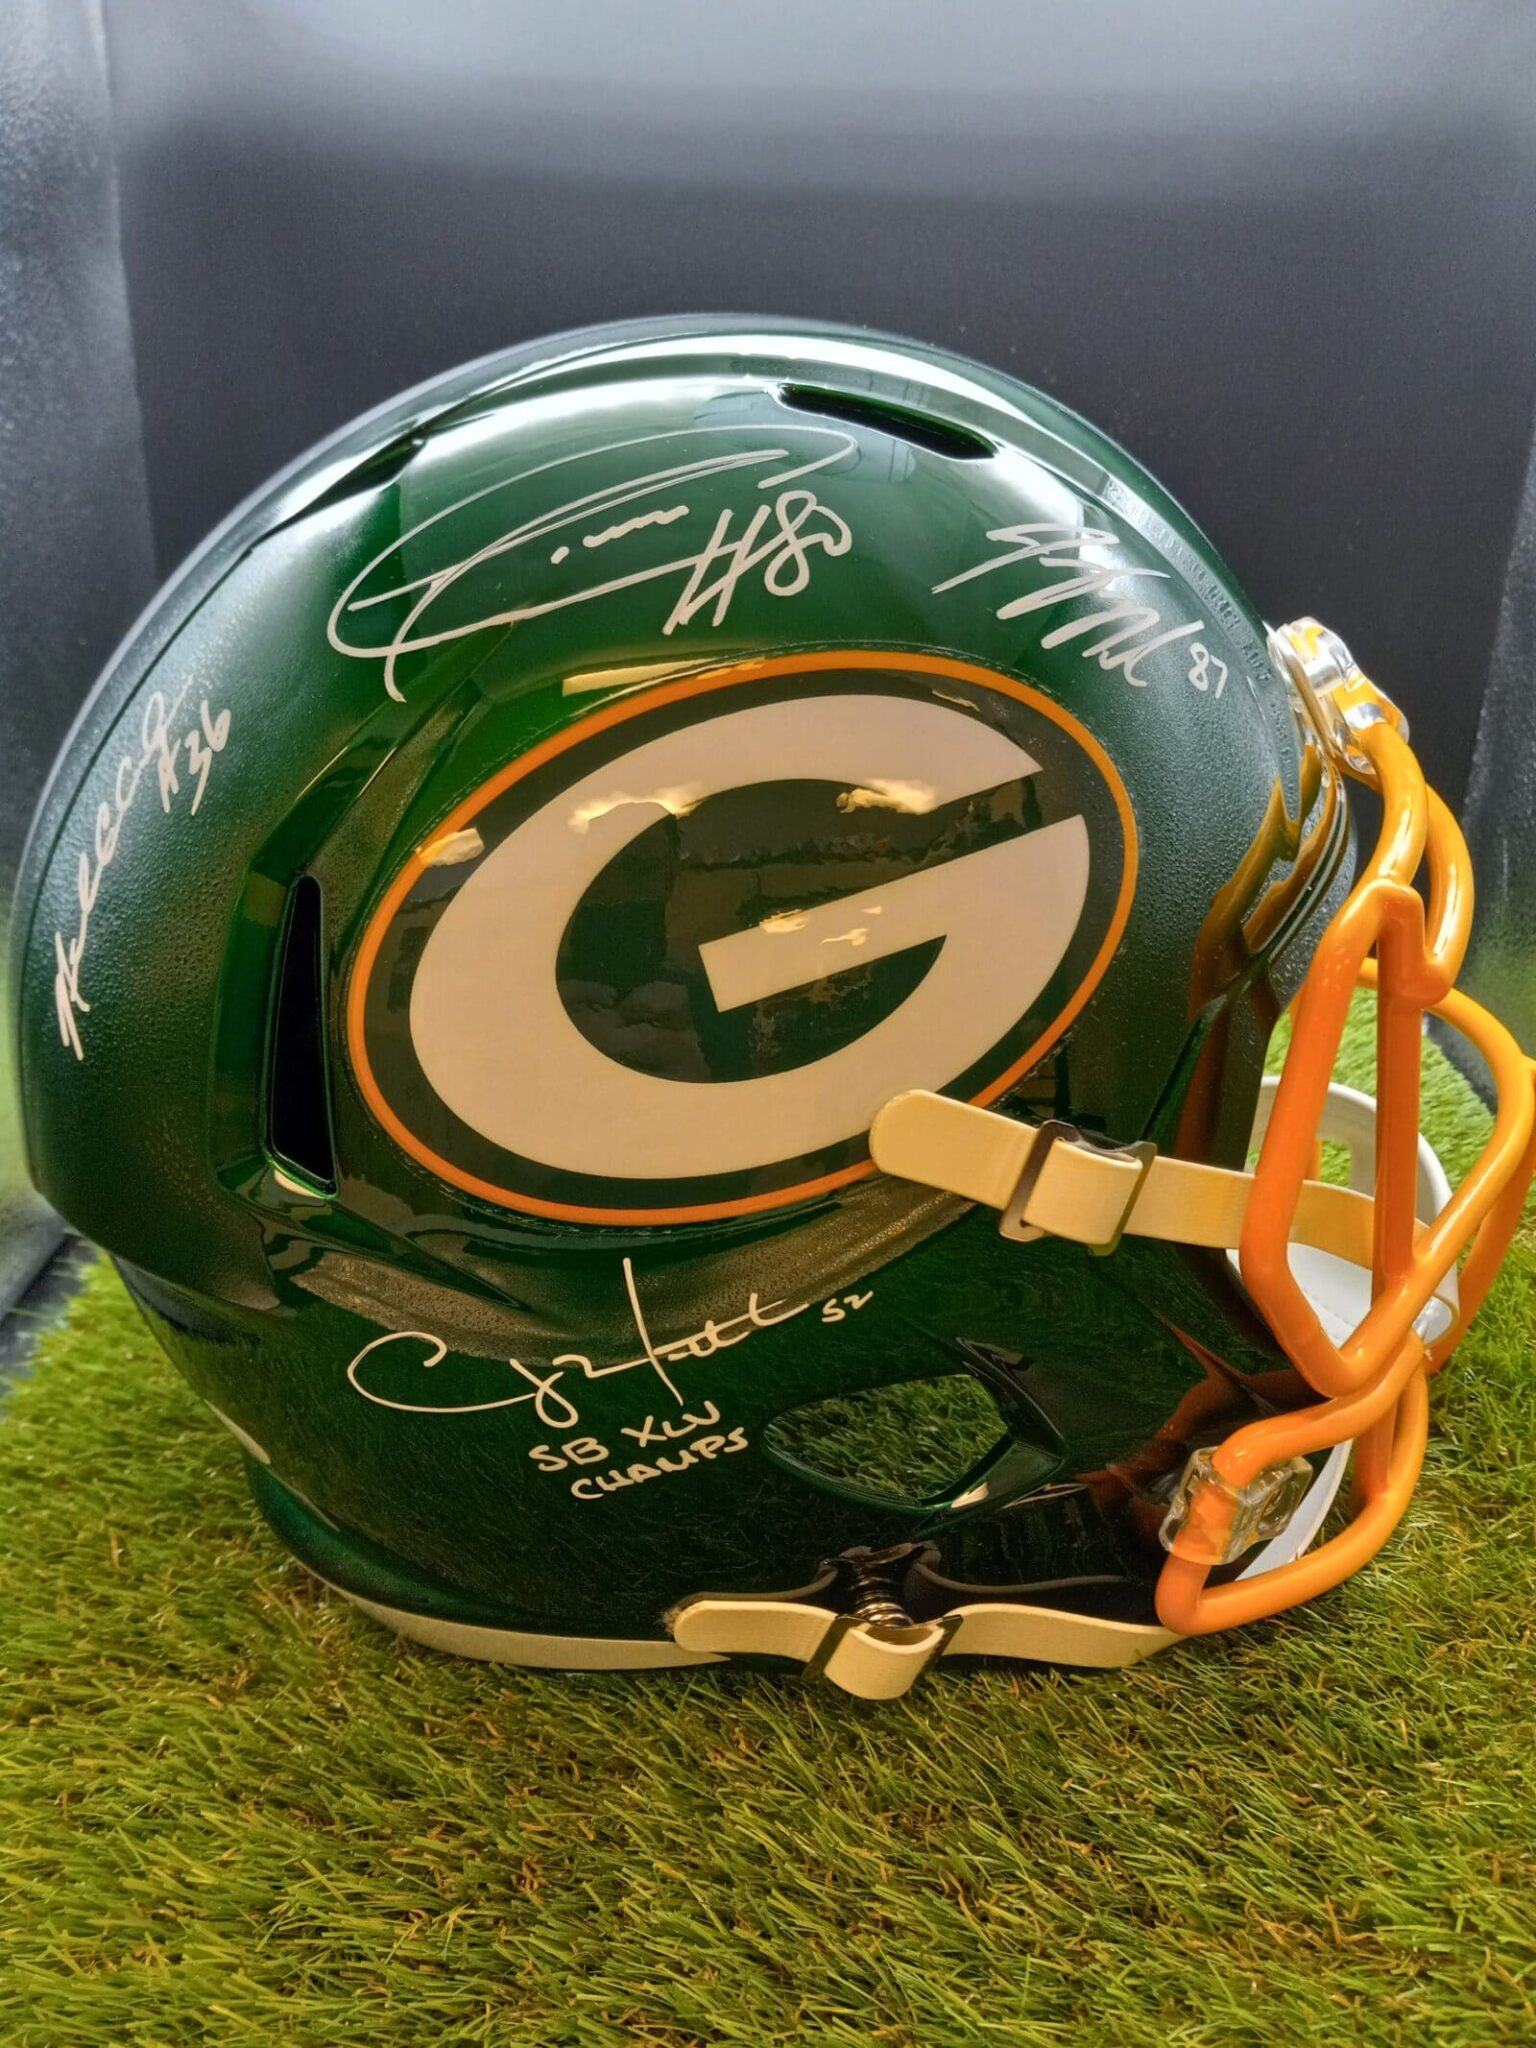 Autographed Football Helmets, autographed helmets, autographed sports memorabilia